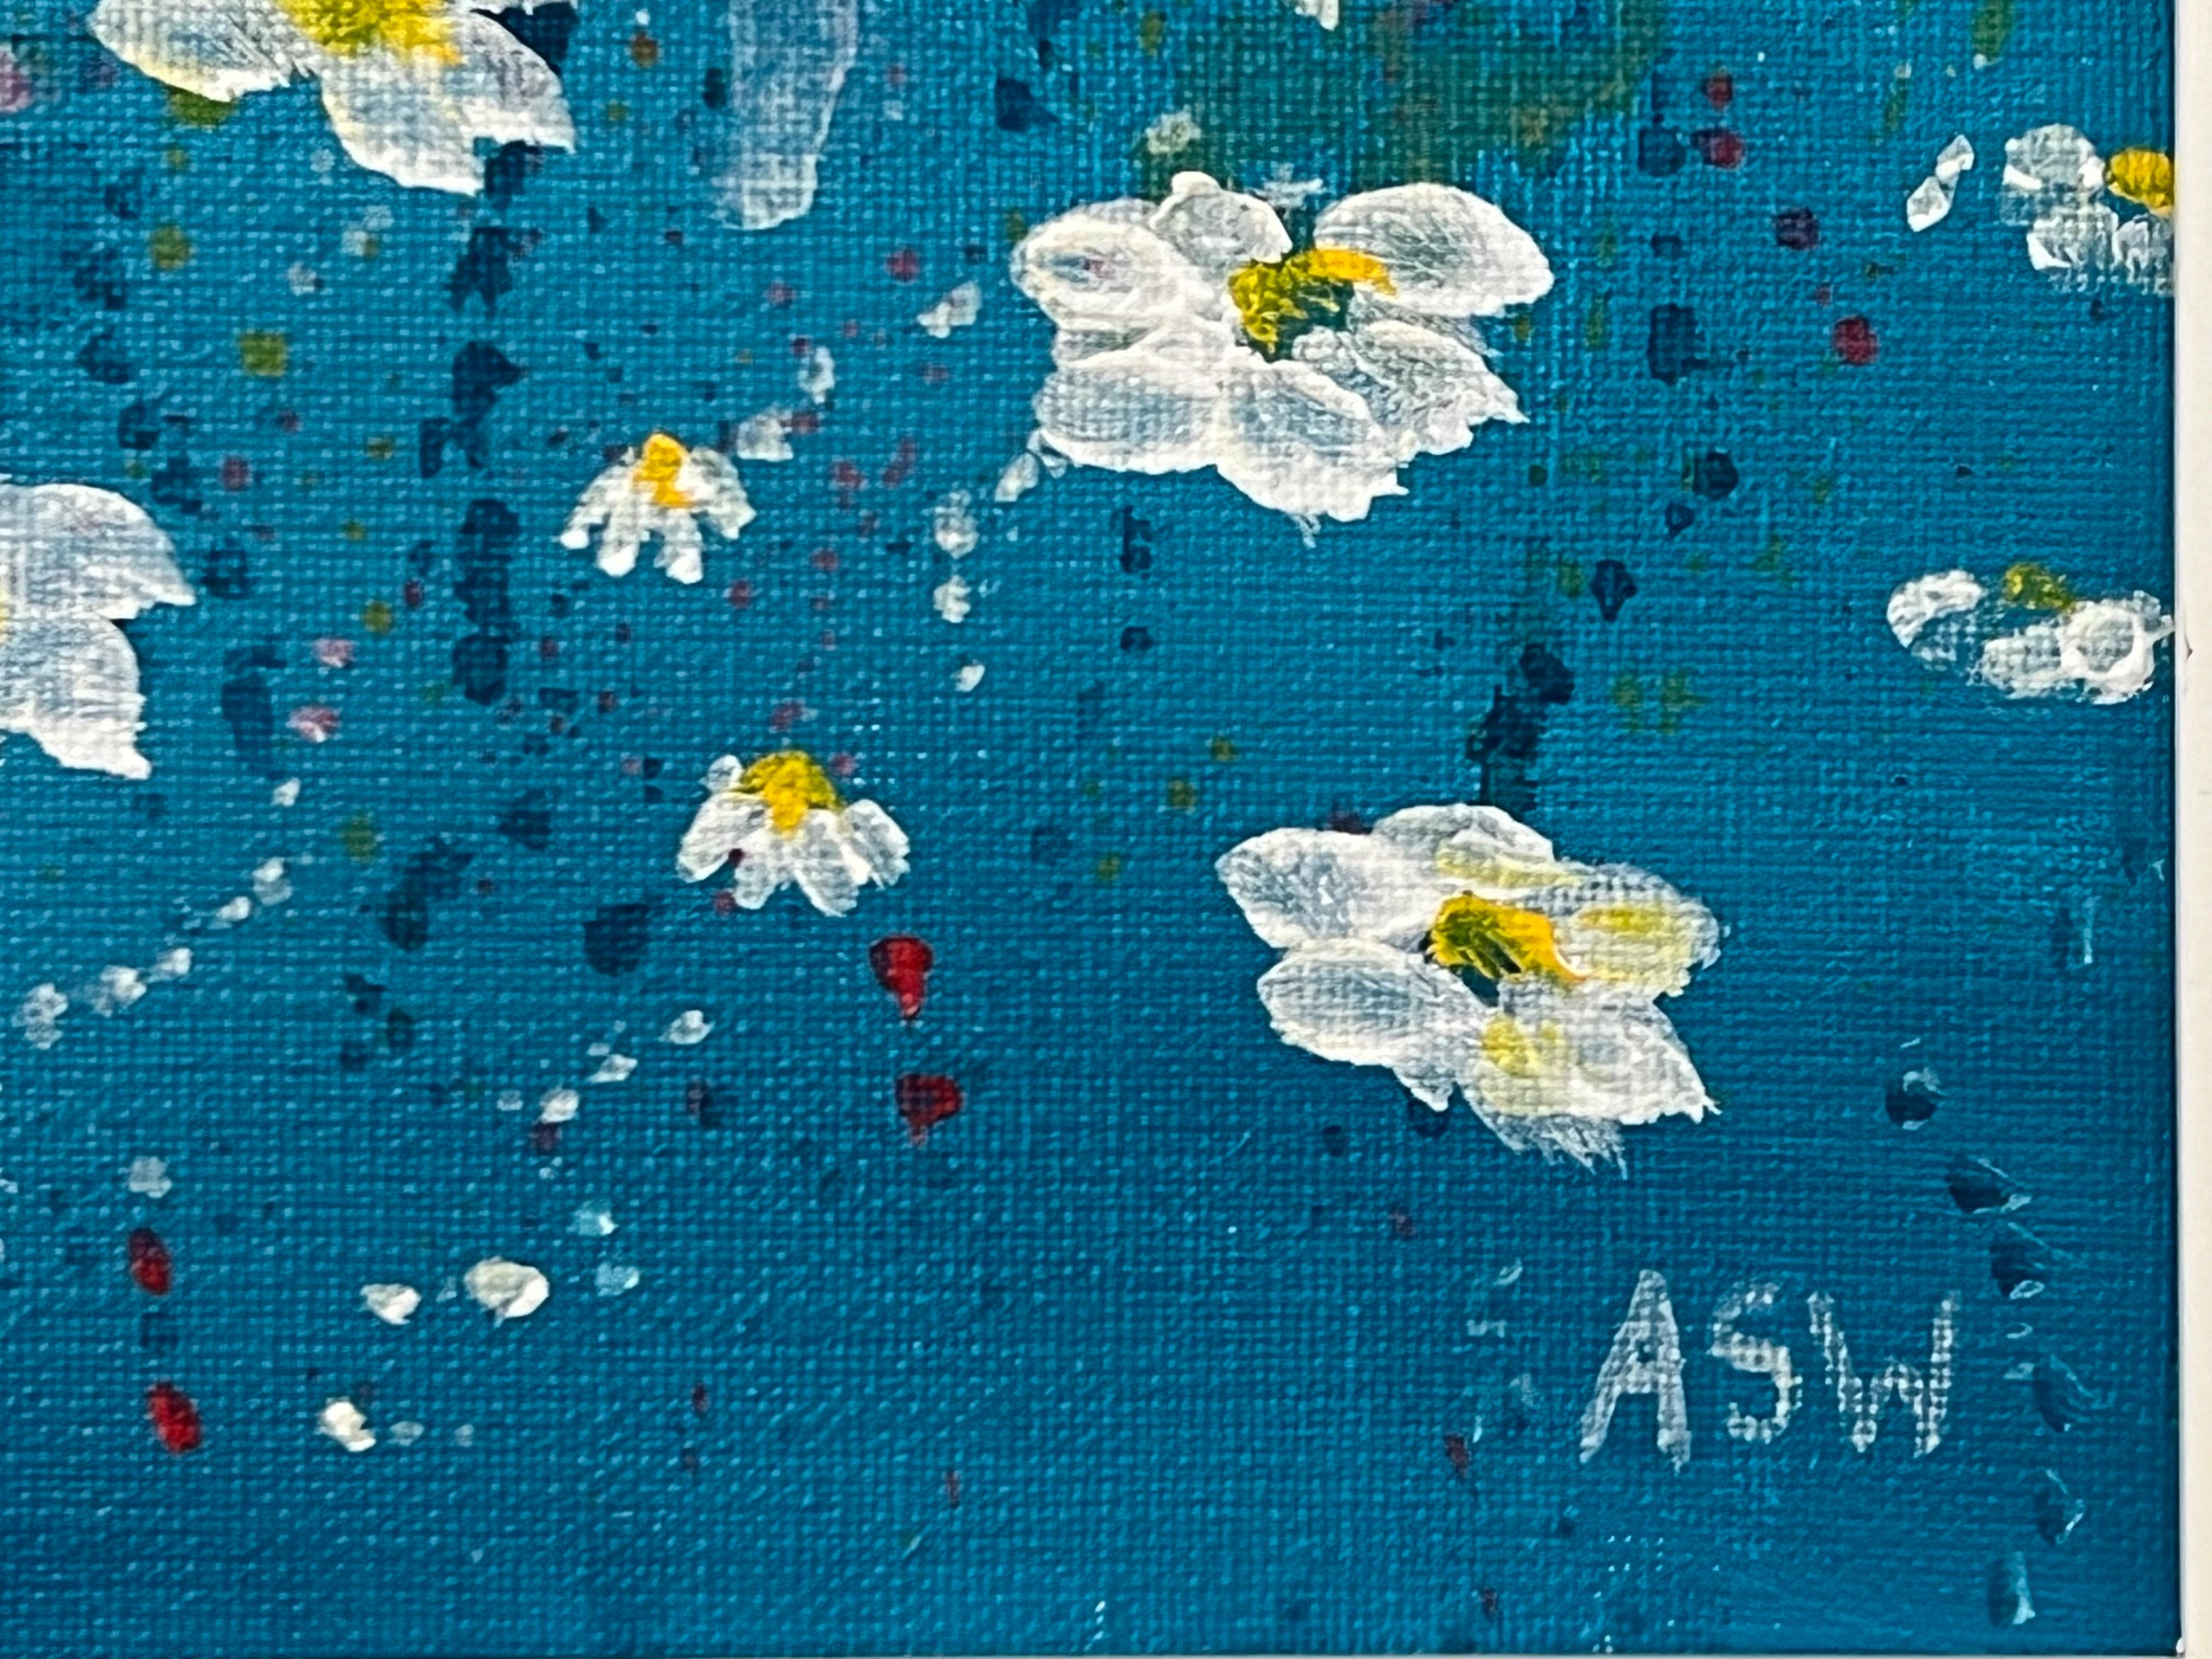 Flores abstractas de margaritas blancas sobre fondo turquesa por Artista Contemporáneo en venta 10